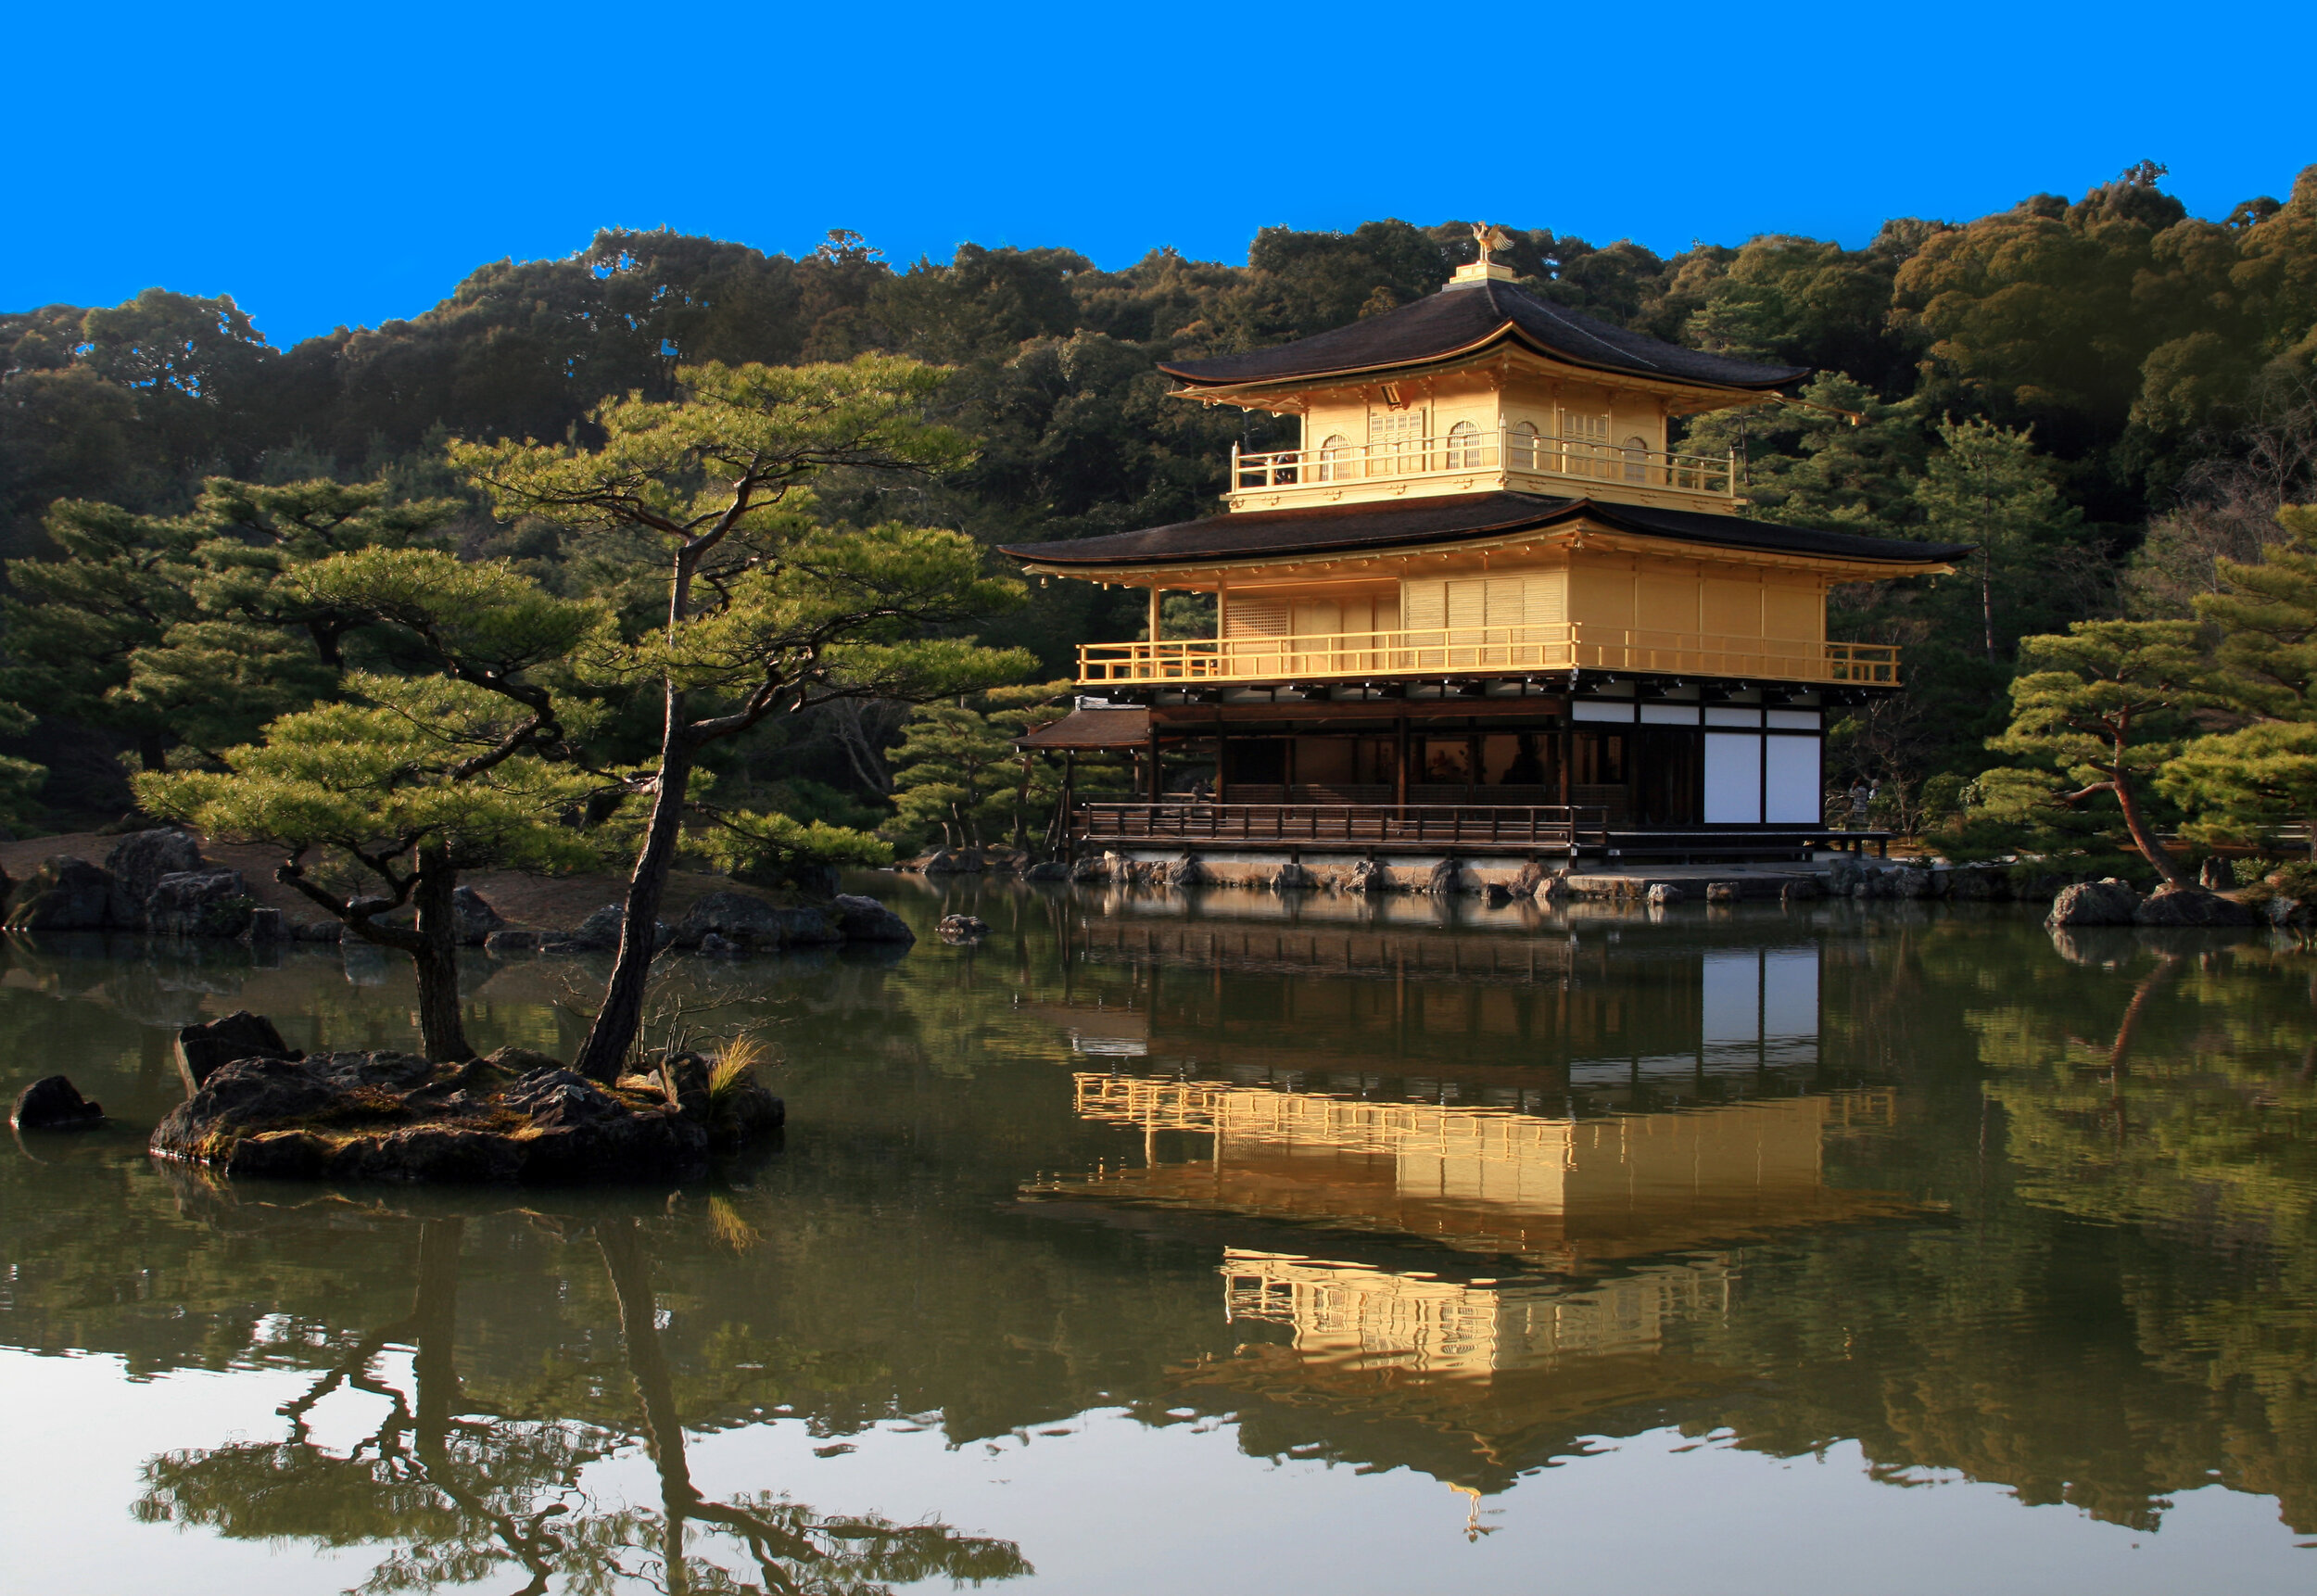  Golden Palace, Kyoto, Japan         